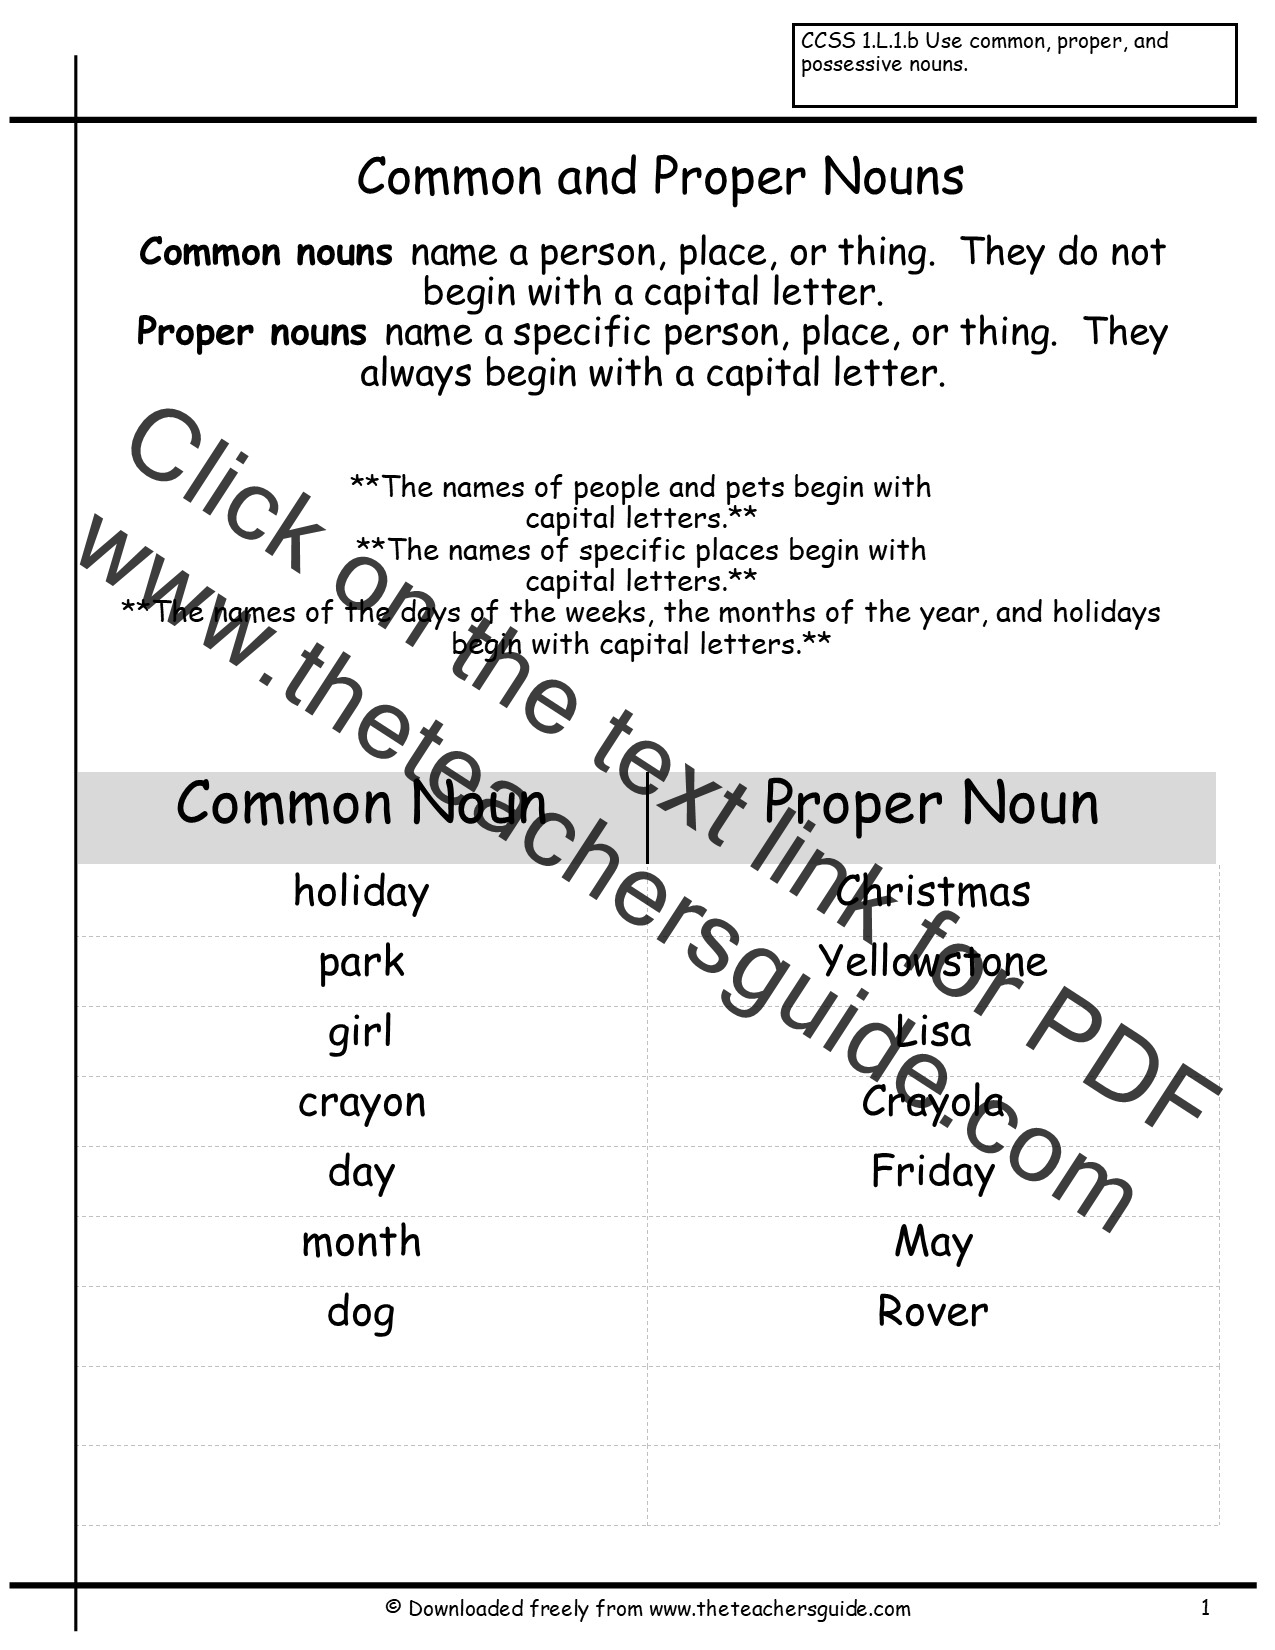 common-and-proper-nouns-worksheets-nouns-proper-common-worksheet-noun-worksheets-grade-class